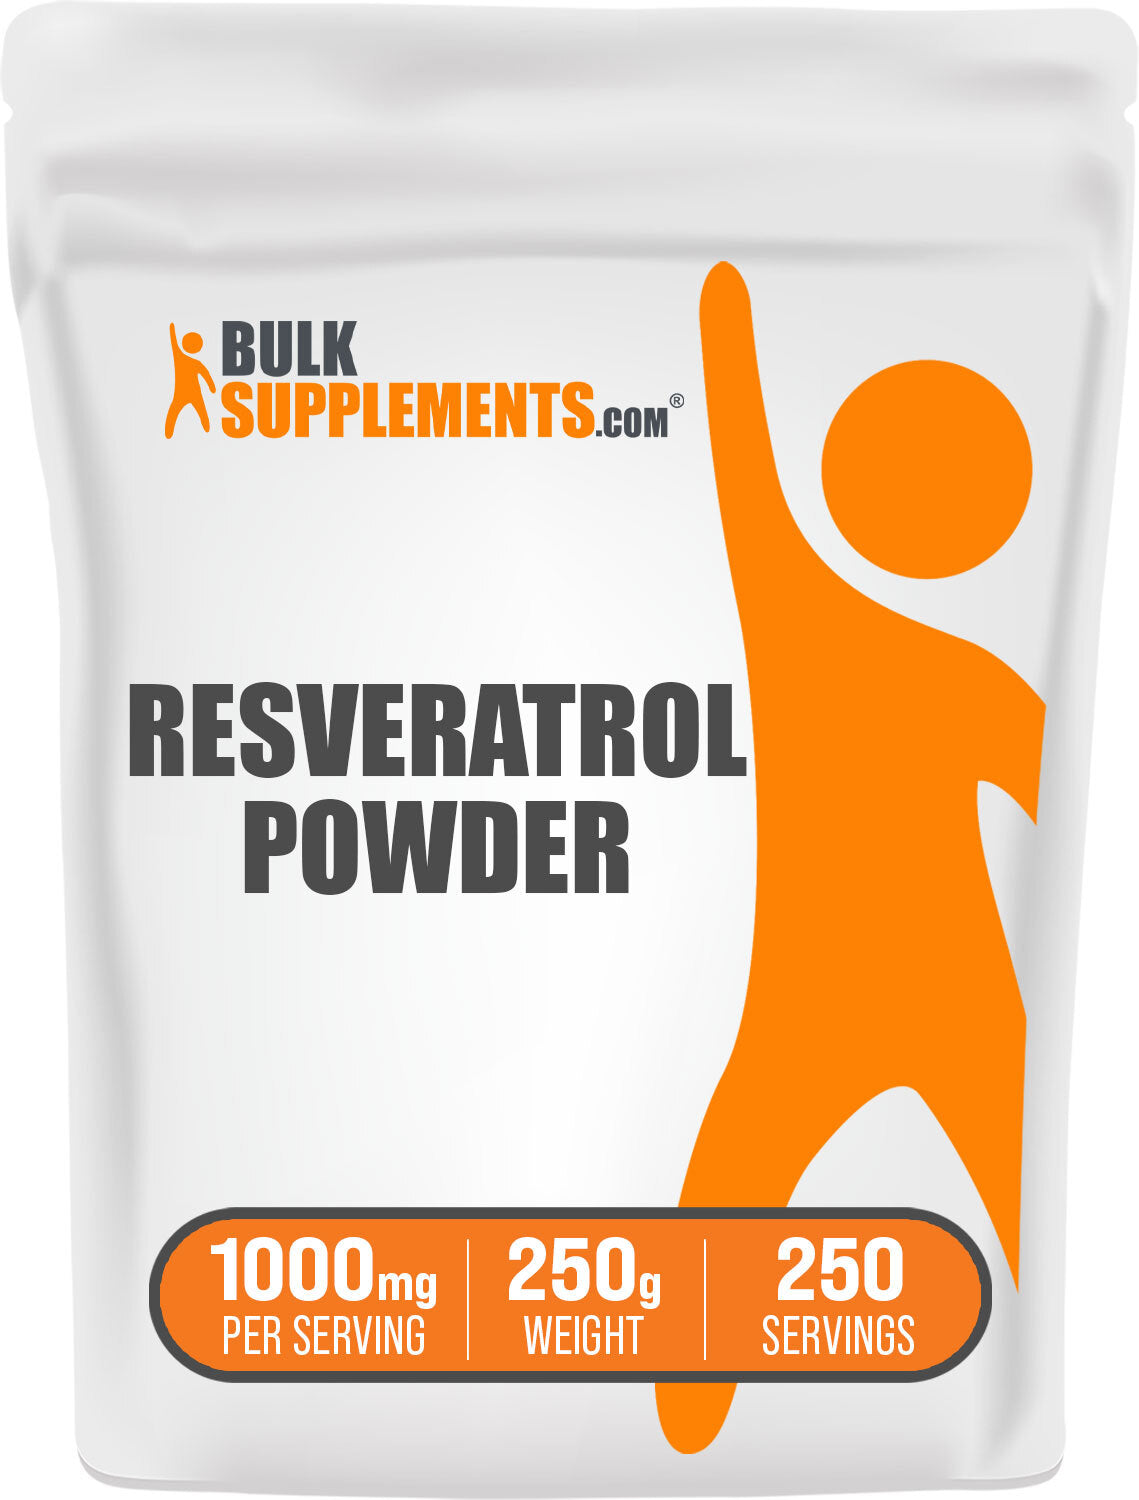 BulkSupplements Resveratrol Powder 250g bag